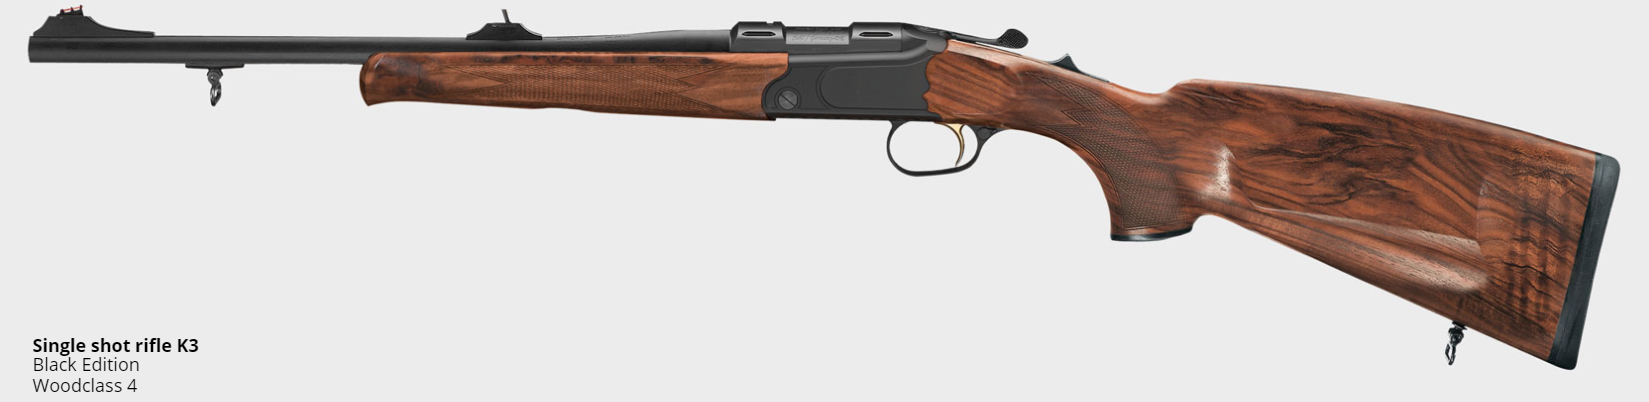 Merkel Rifle K3